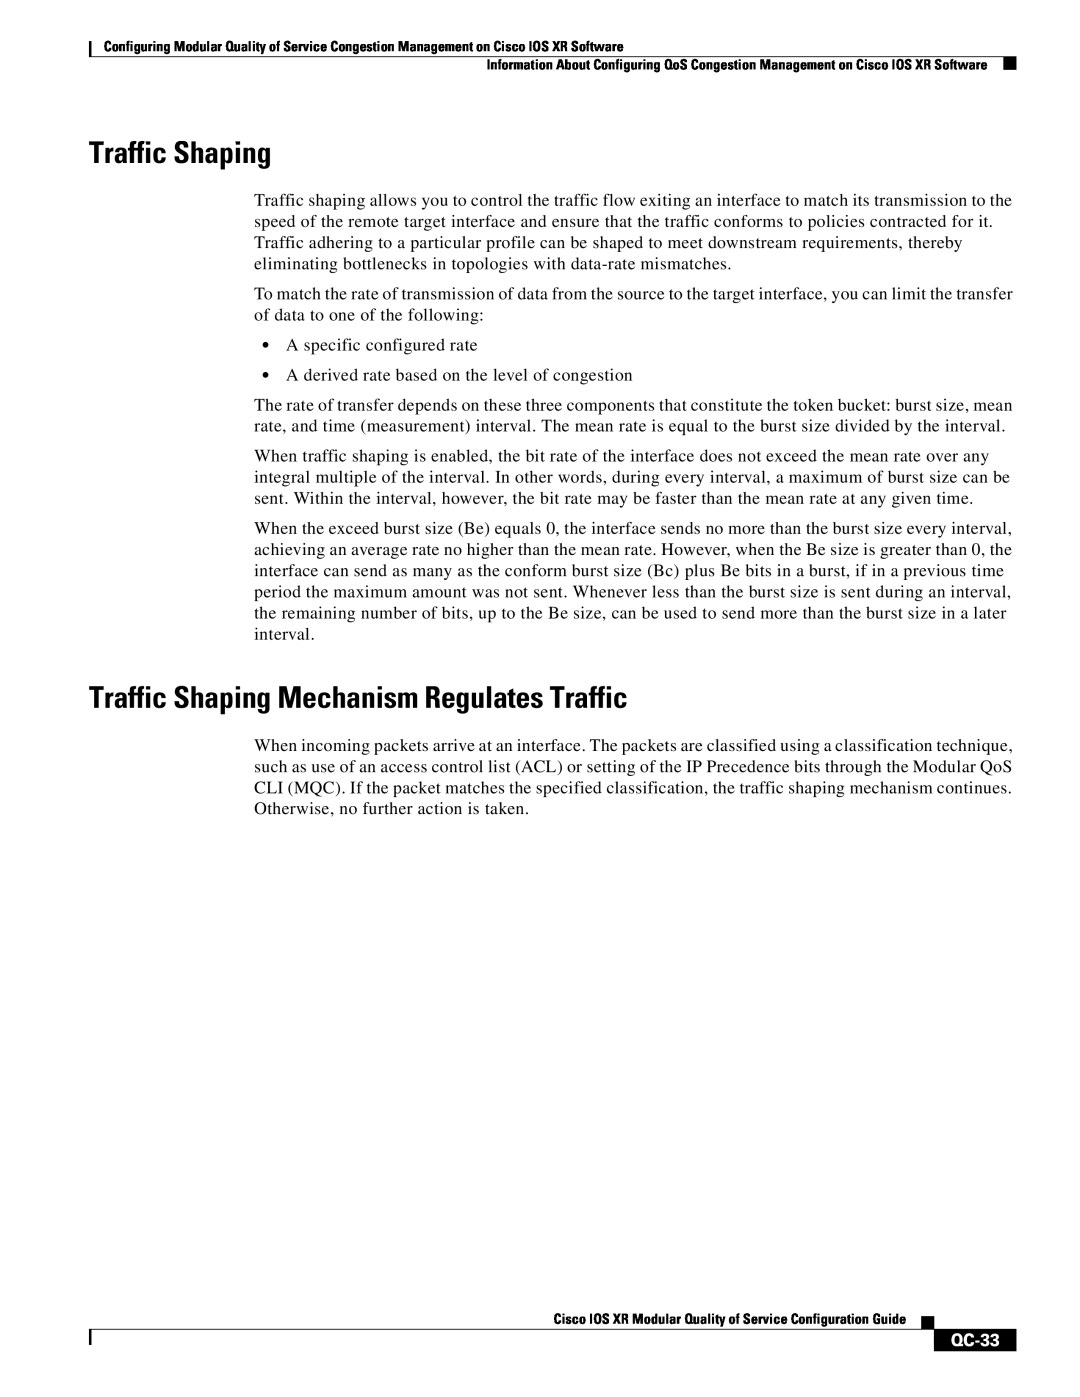 Cisco Systems QC-29 manual Traffic Shaping Mechanism Regulates Traffic, QC-33 